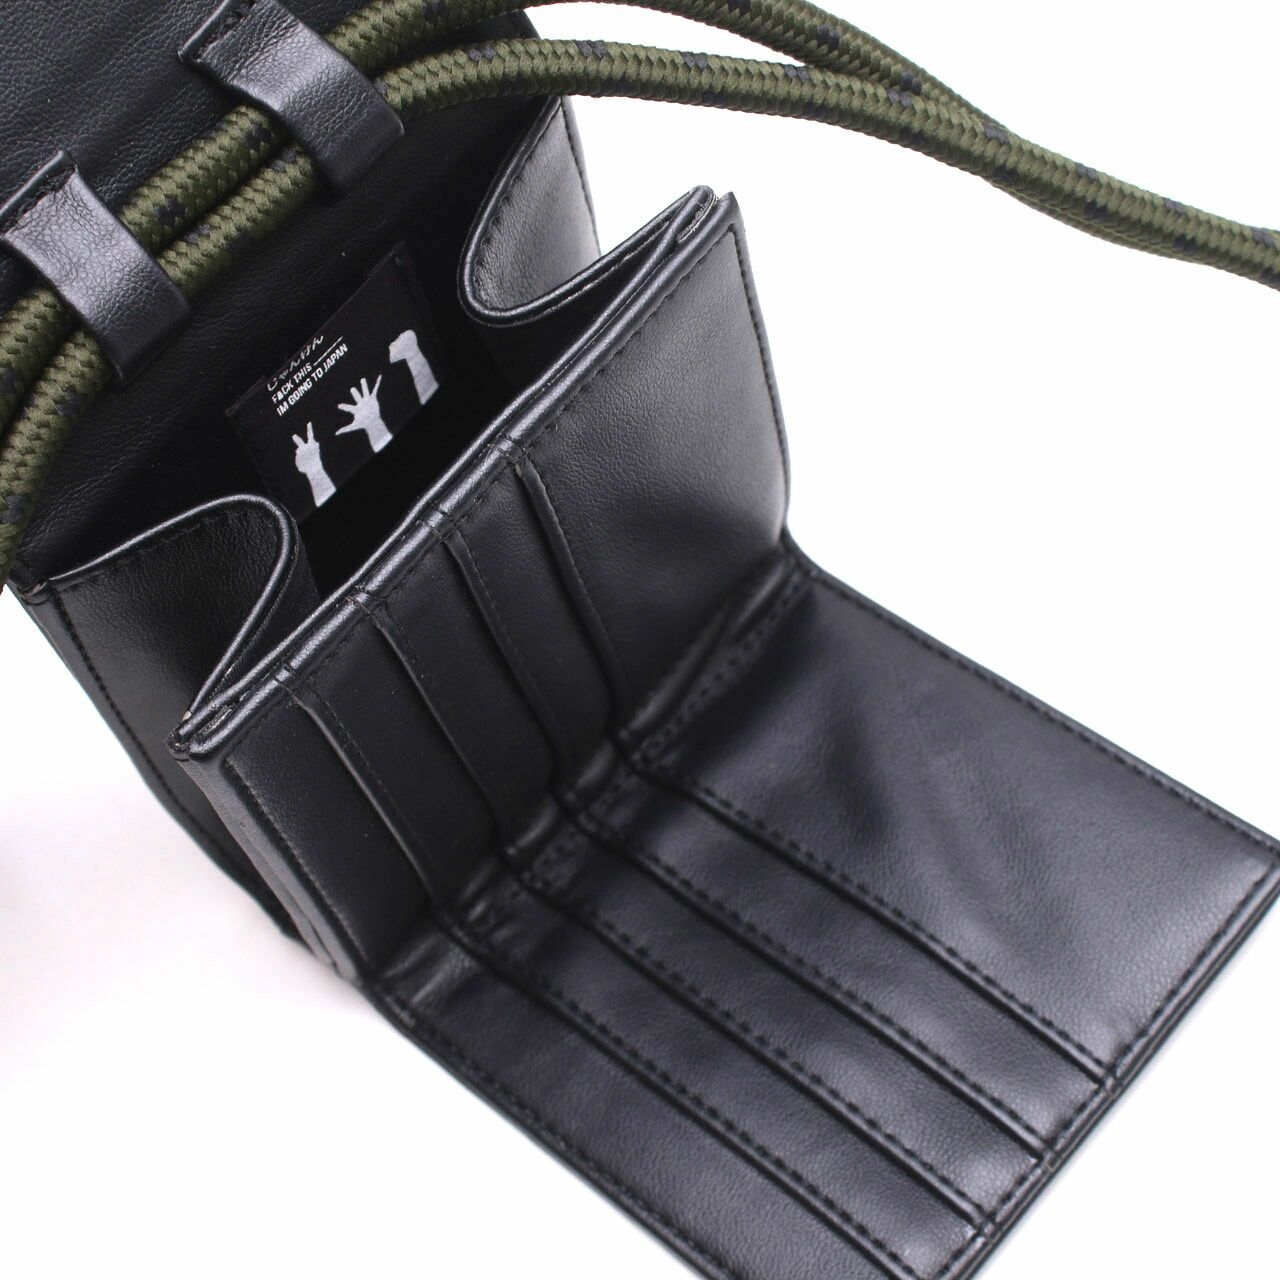 scipaprock Black Wallet With Long Strap